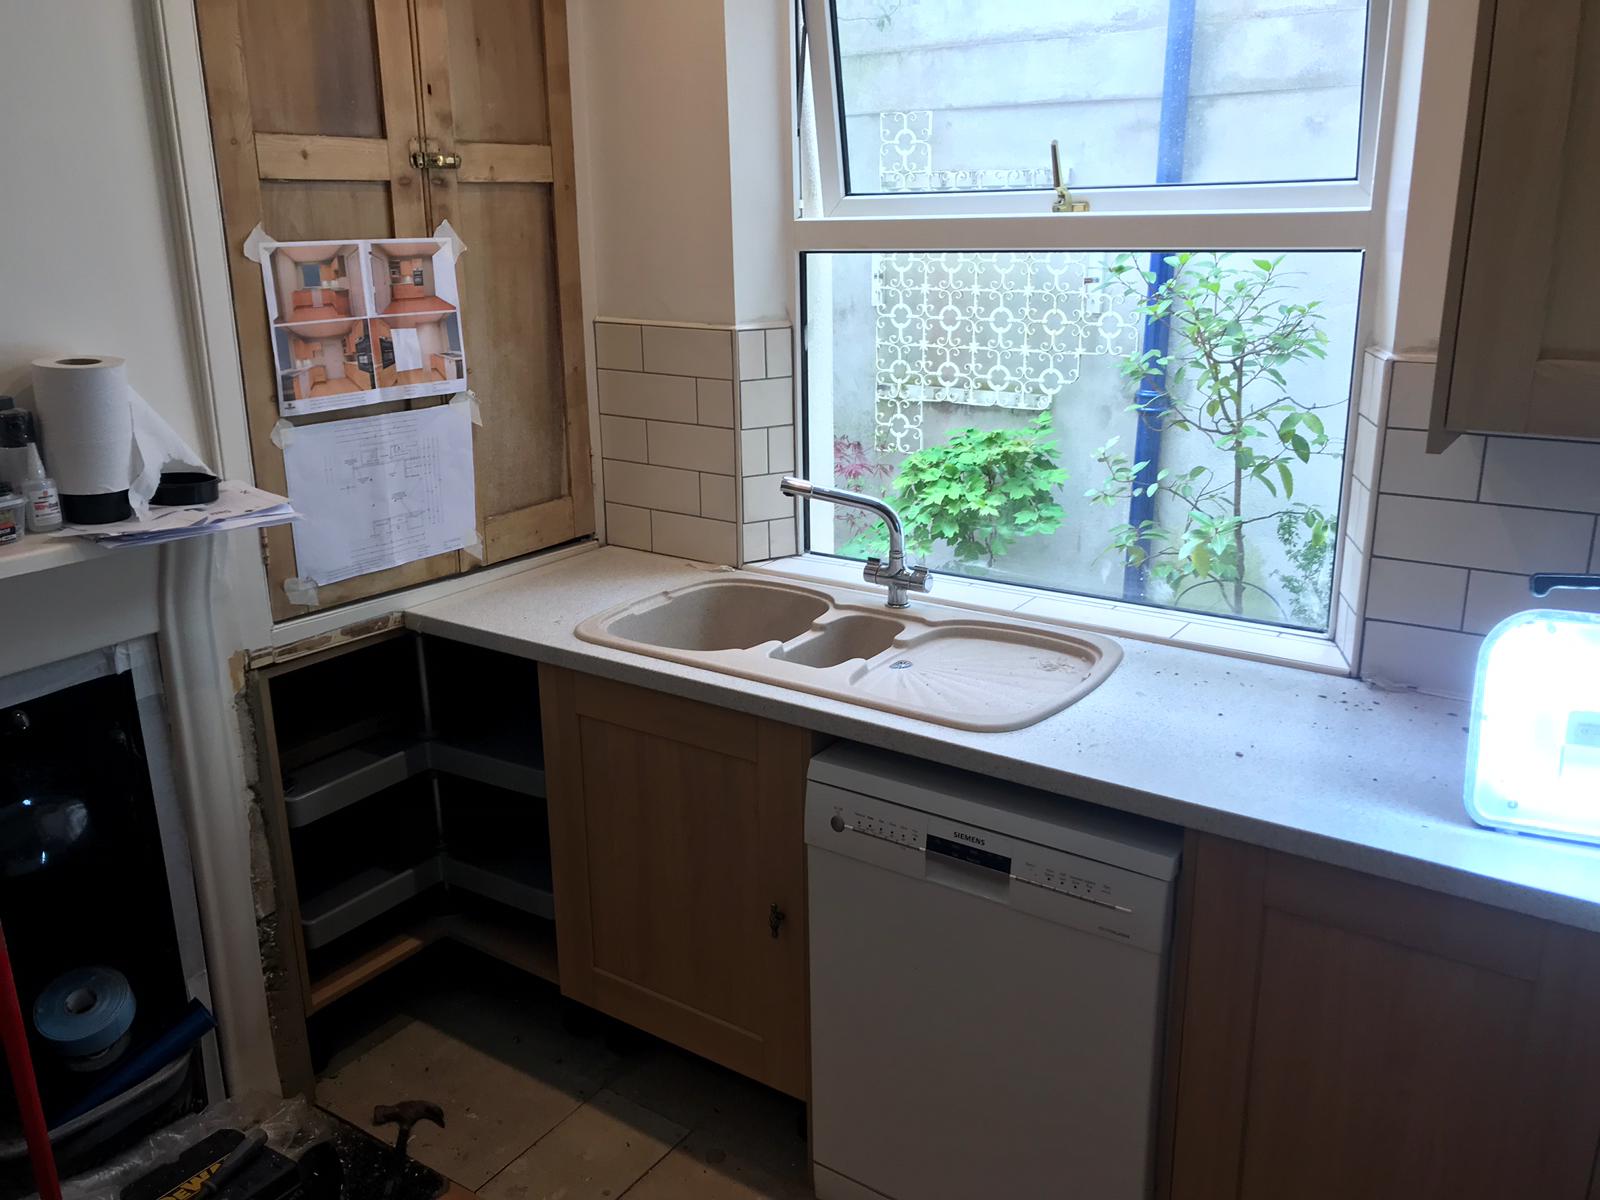 Sink and washing machine installed